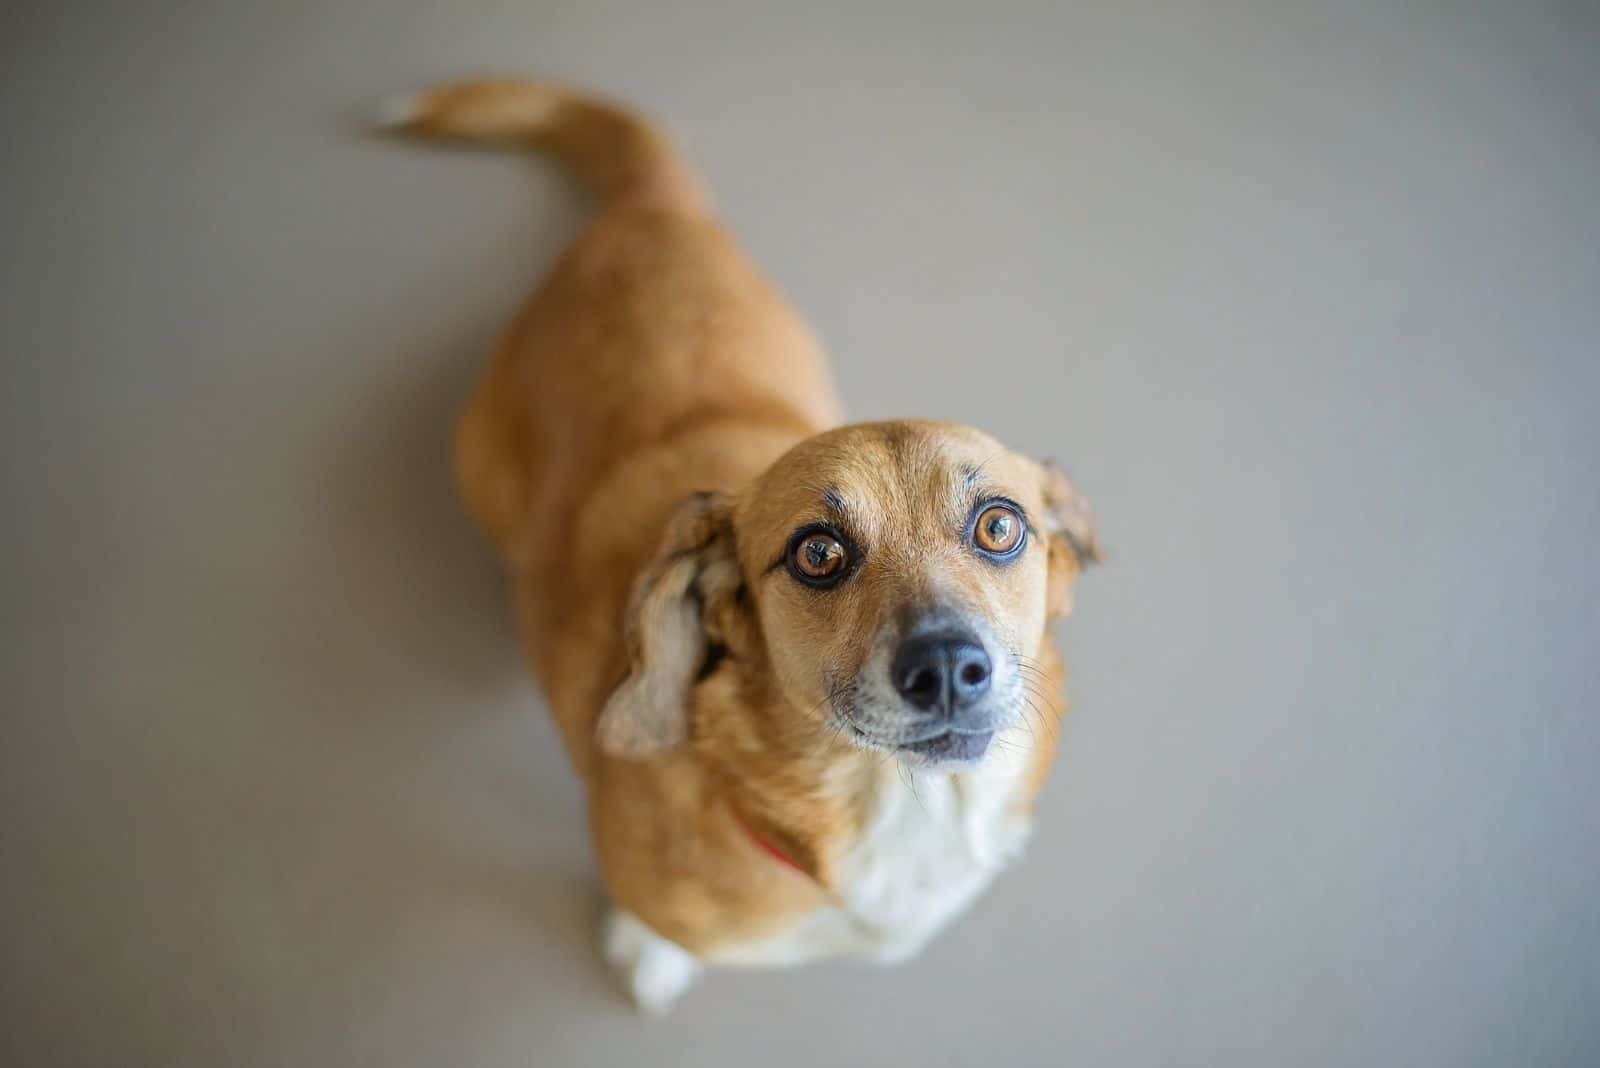 mixbreed dachshund corgi in the animal shelter 